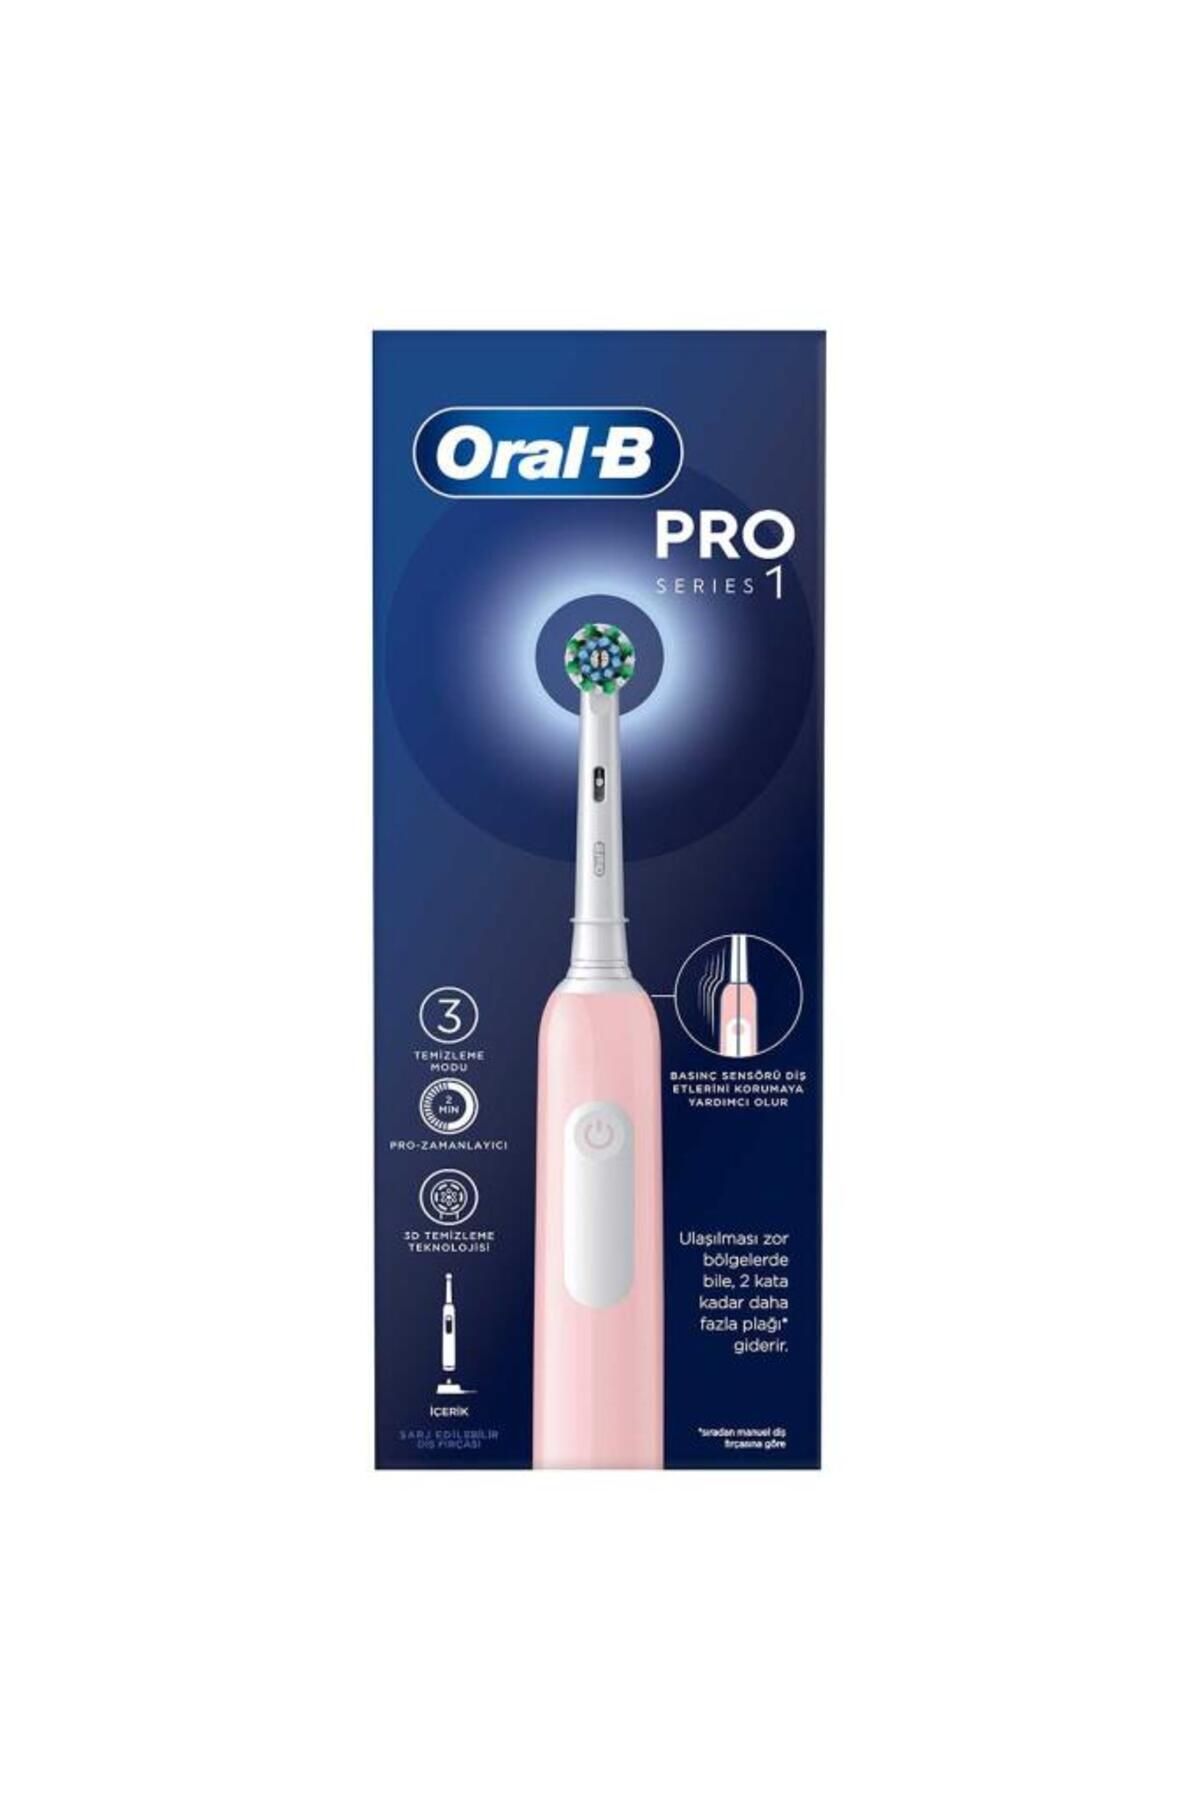 Oral-B Pro Series 1 Şarjlı Diş Fırçası - Pembe 80713554